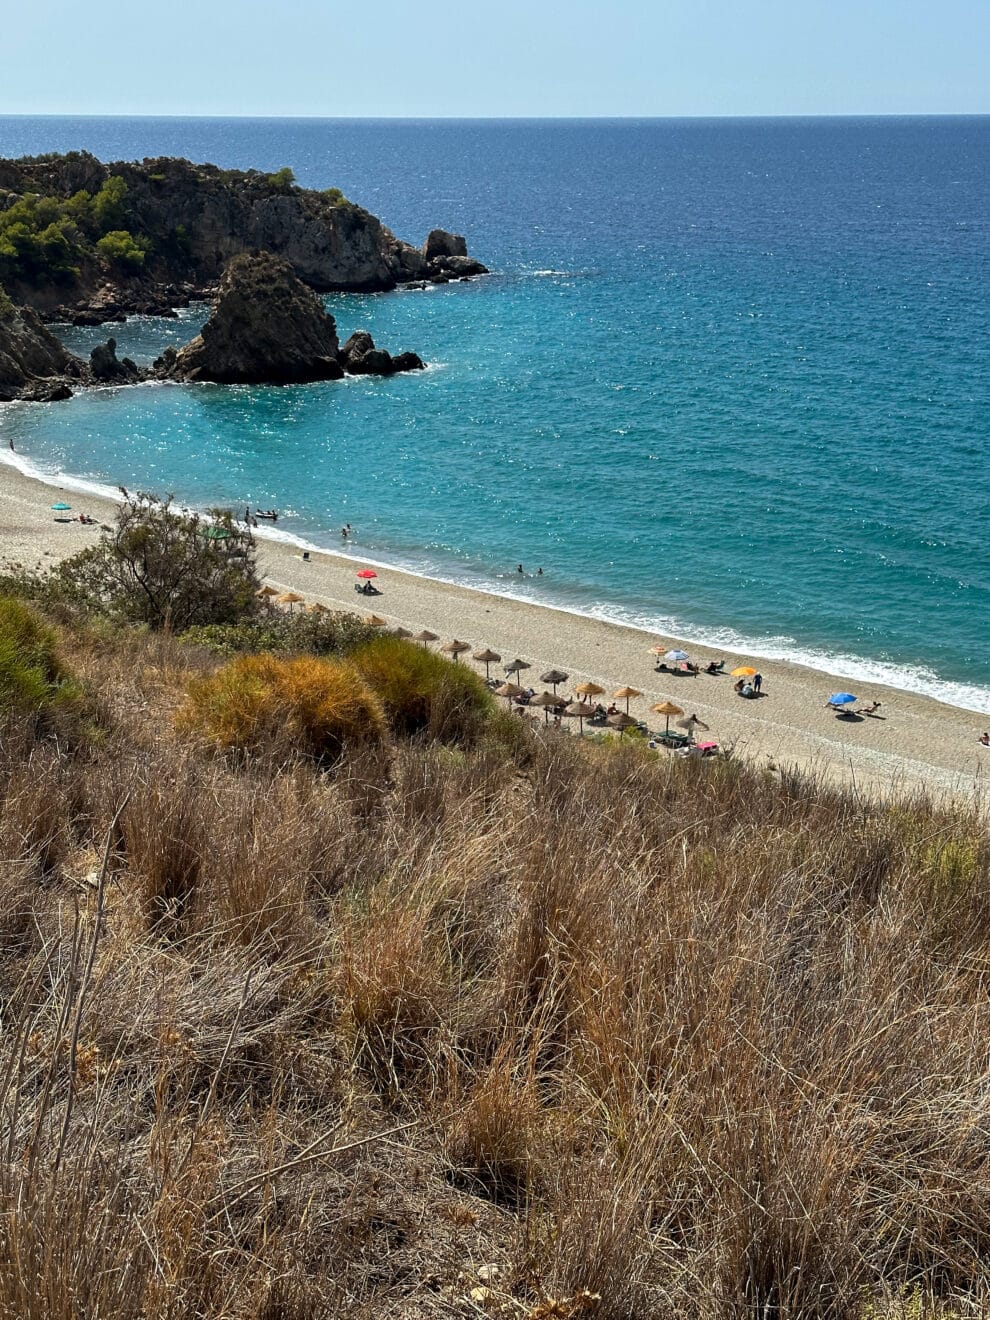 Mooiste stranden in de buurt van Malaga - Costa Tropical - Cala del Cañuelo